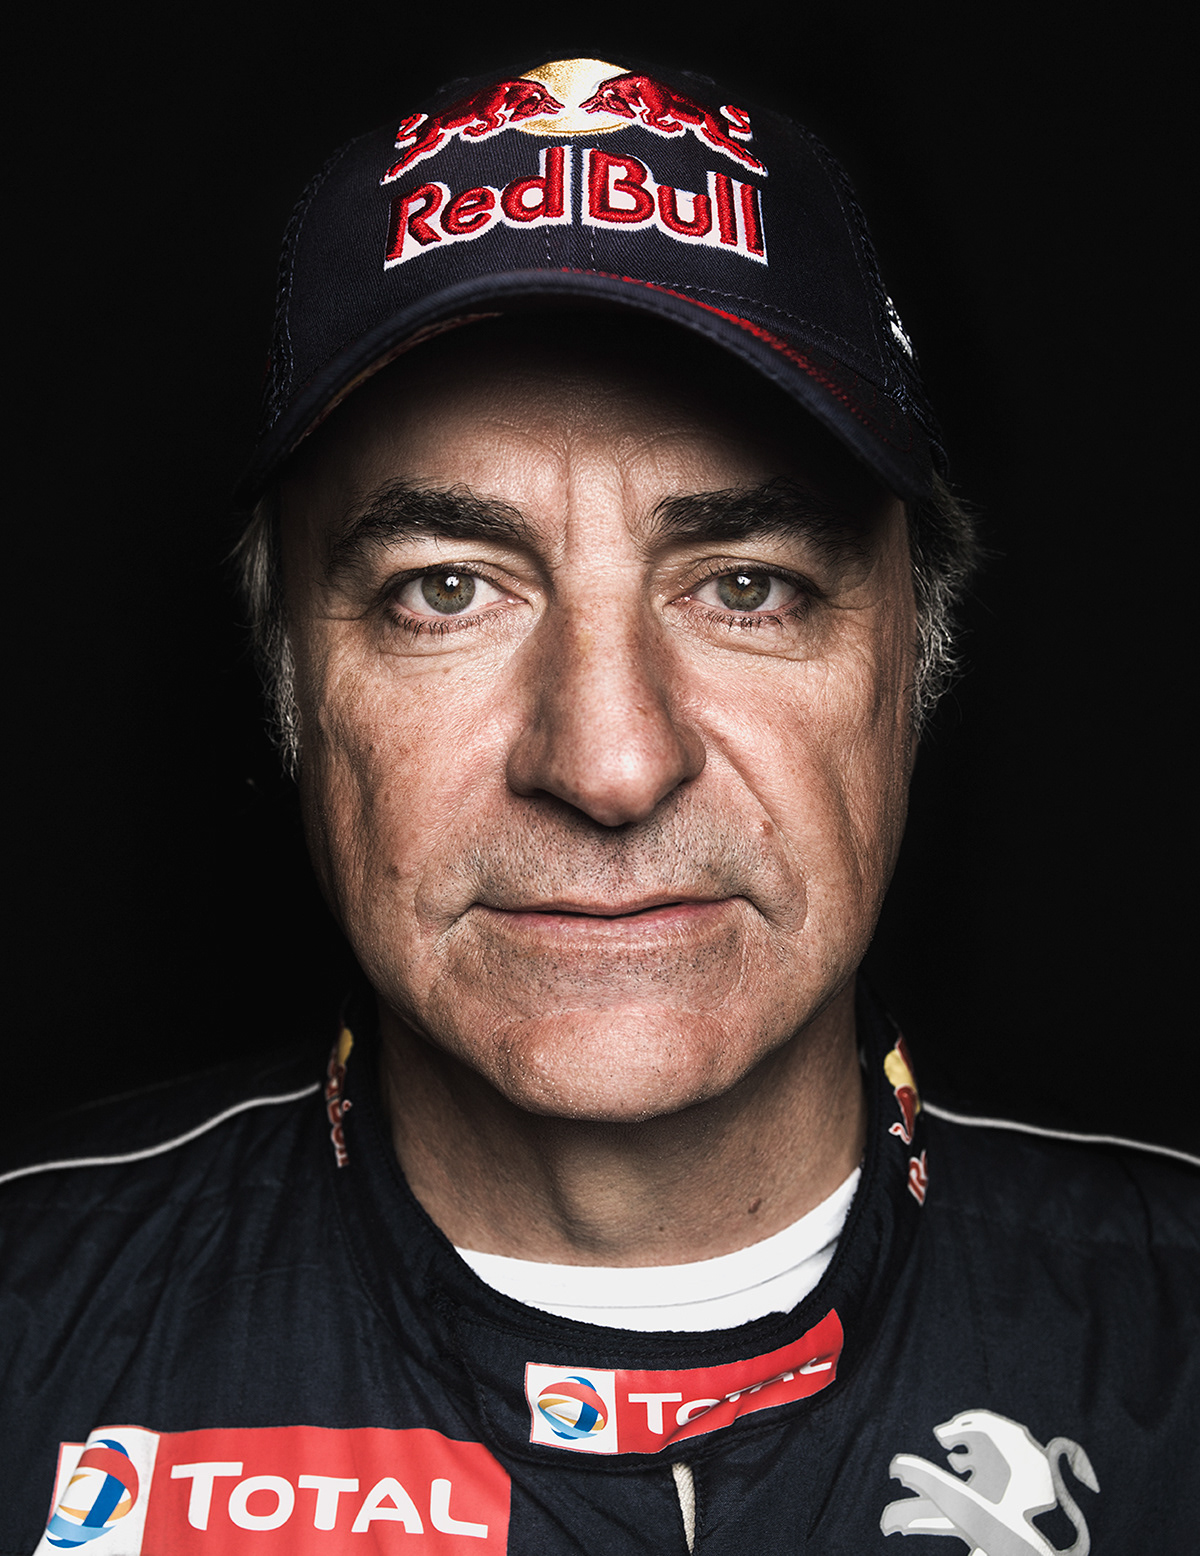 PEUGEOT Red Bull dakar portrait retrato Carlos Sainz rally driver Racing